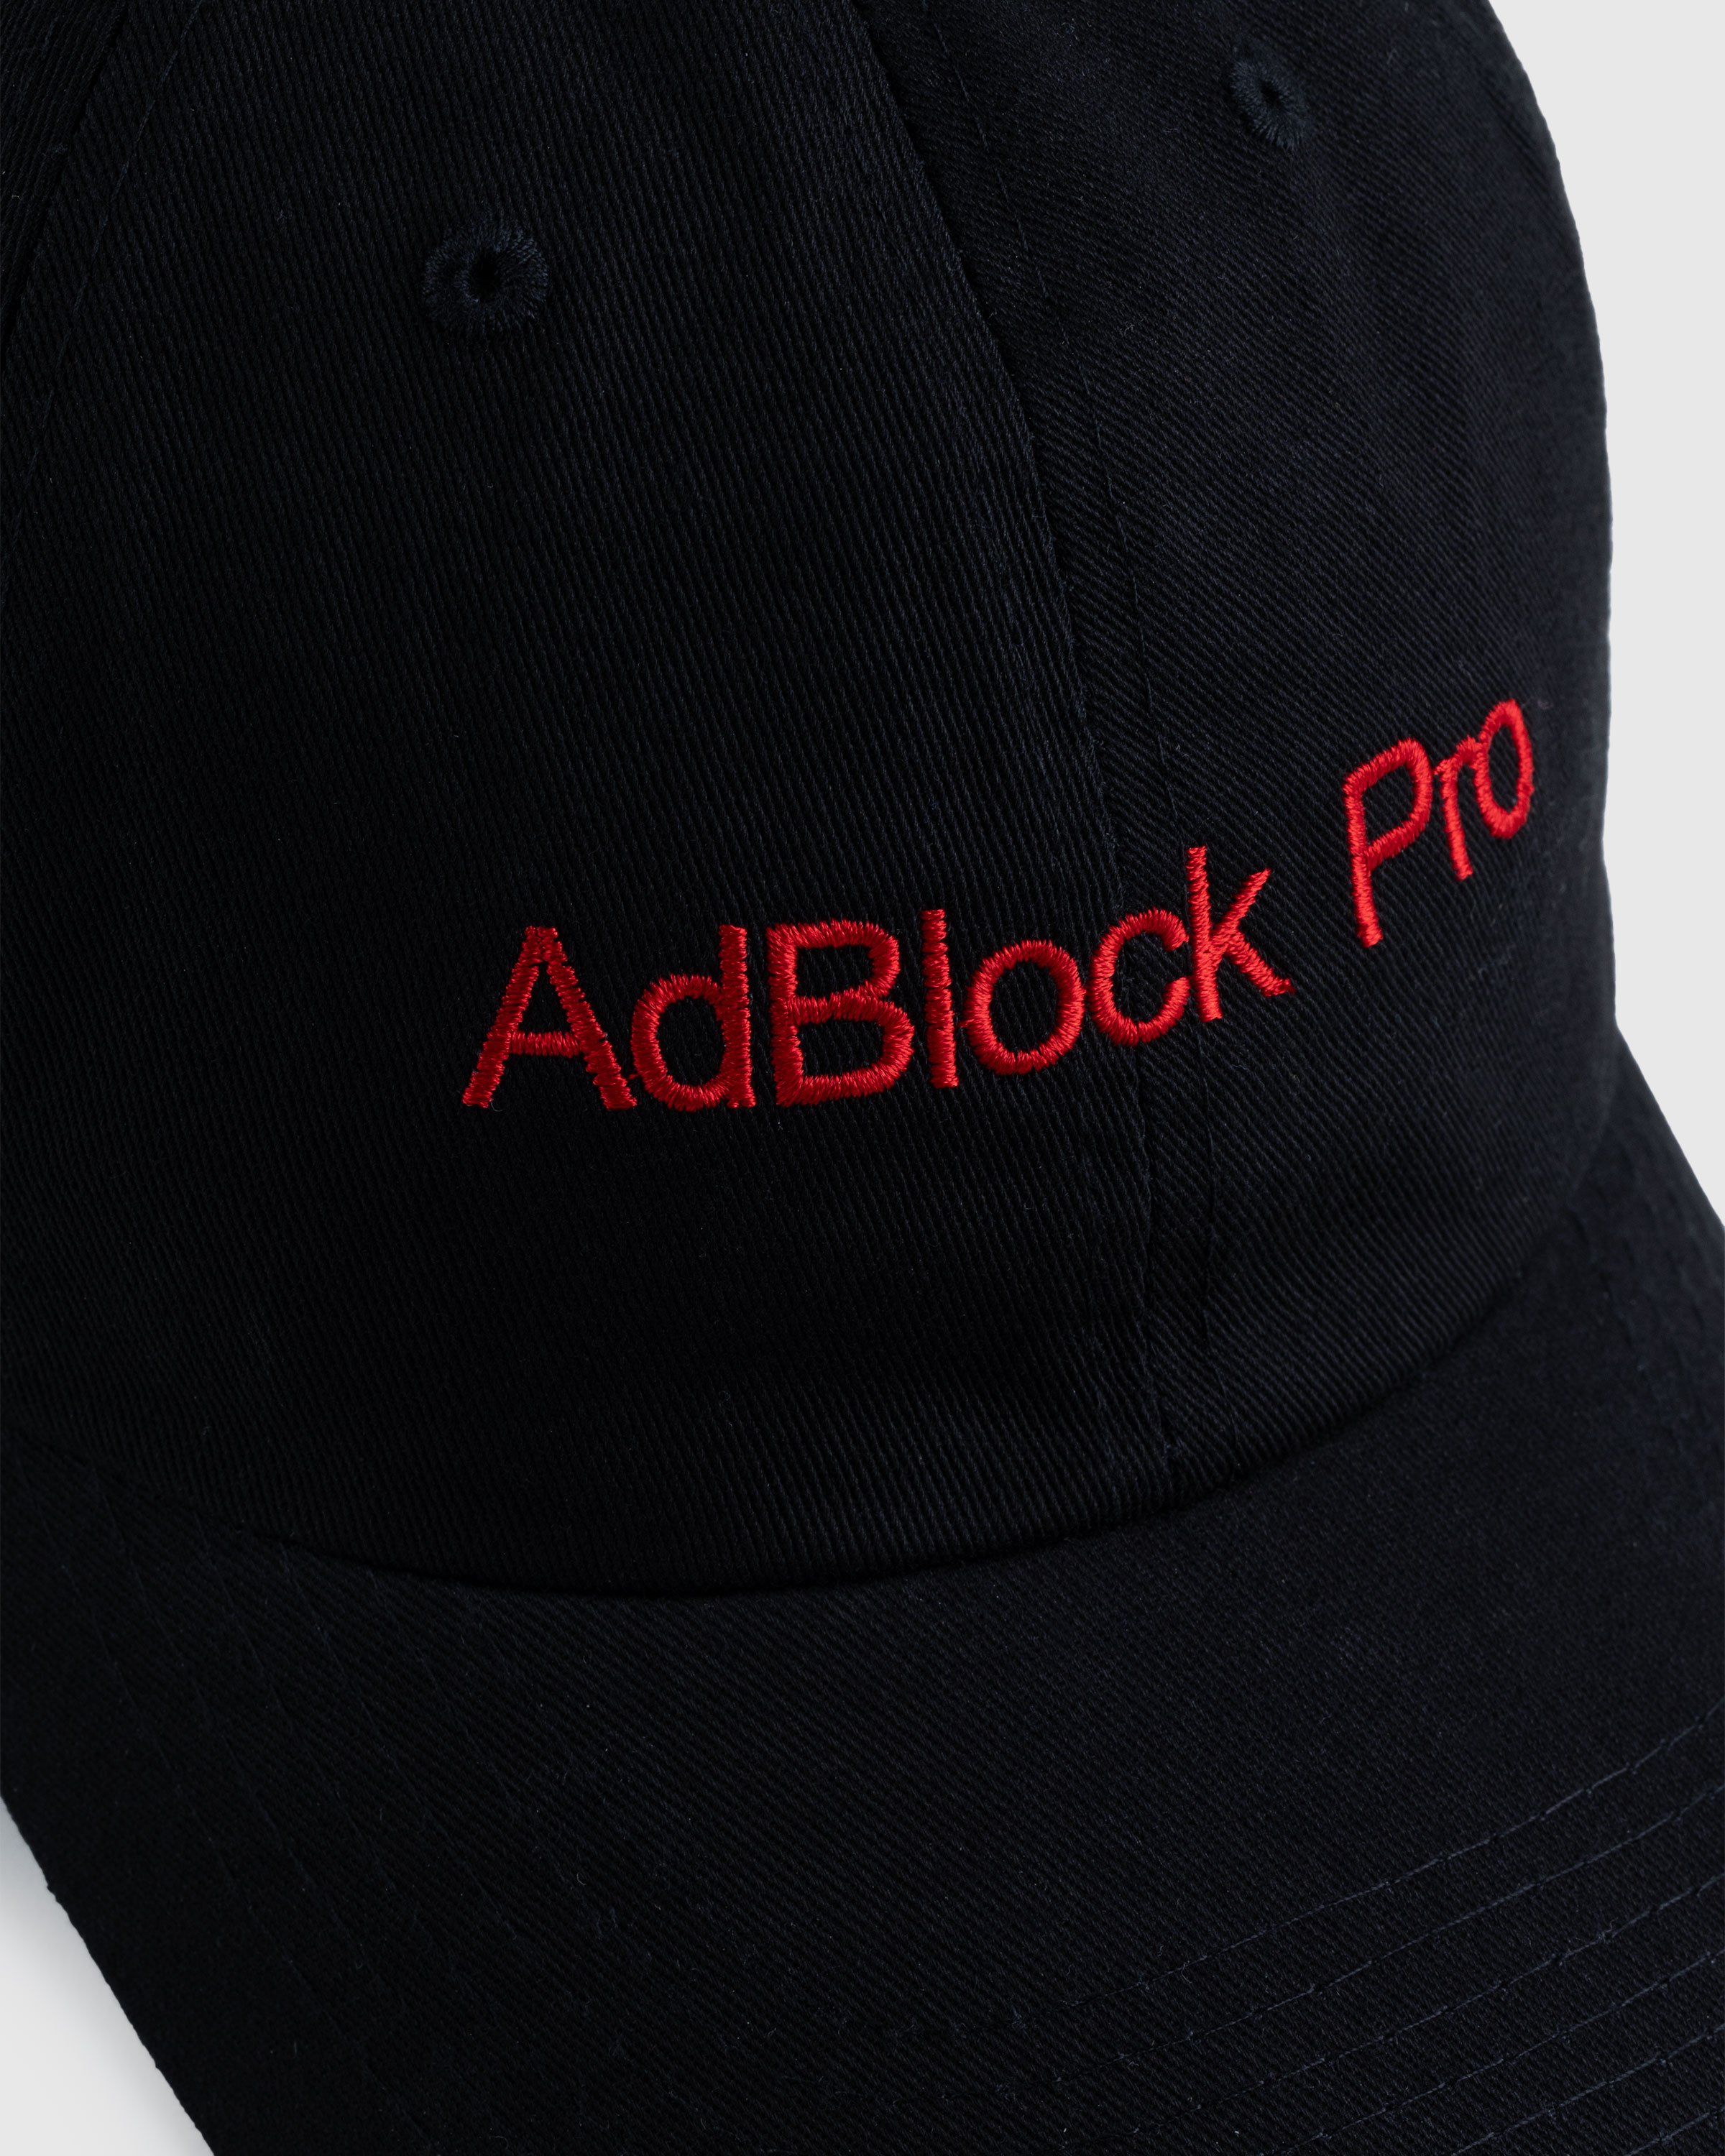 HO HO COCO - ADBLOCK PRO BLACK X RED - Accessories - Black - Image 5